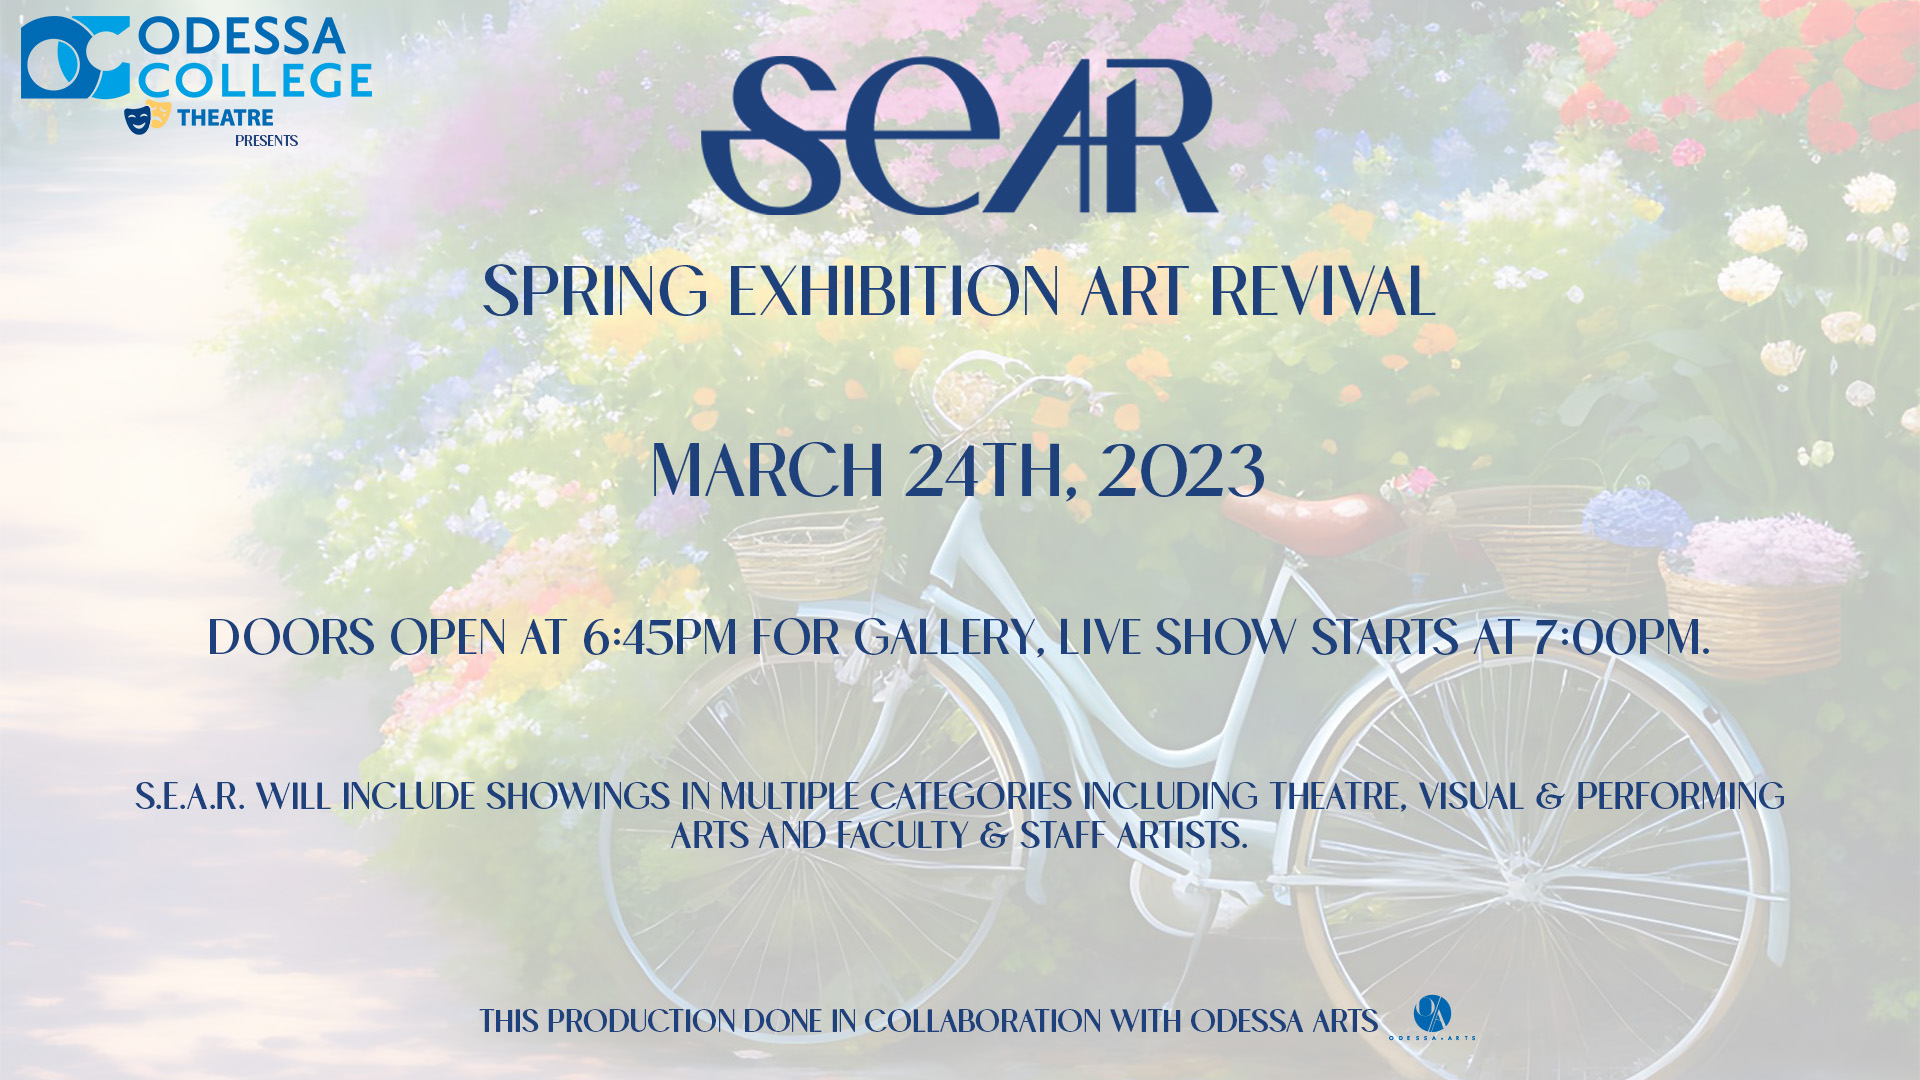 Spring Exhibition Art Revival